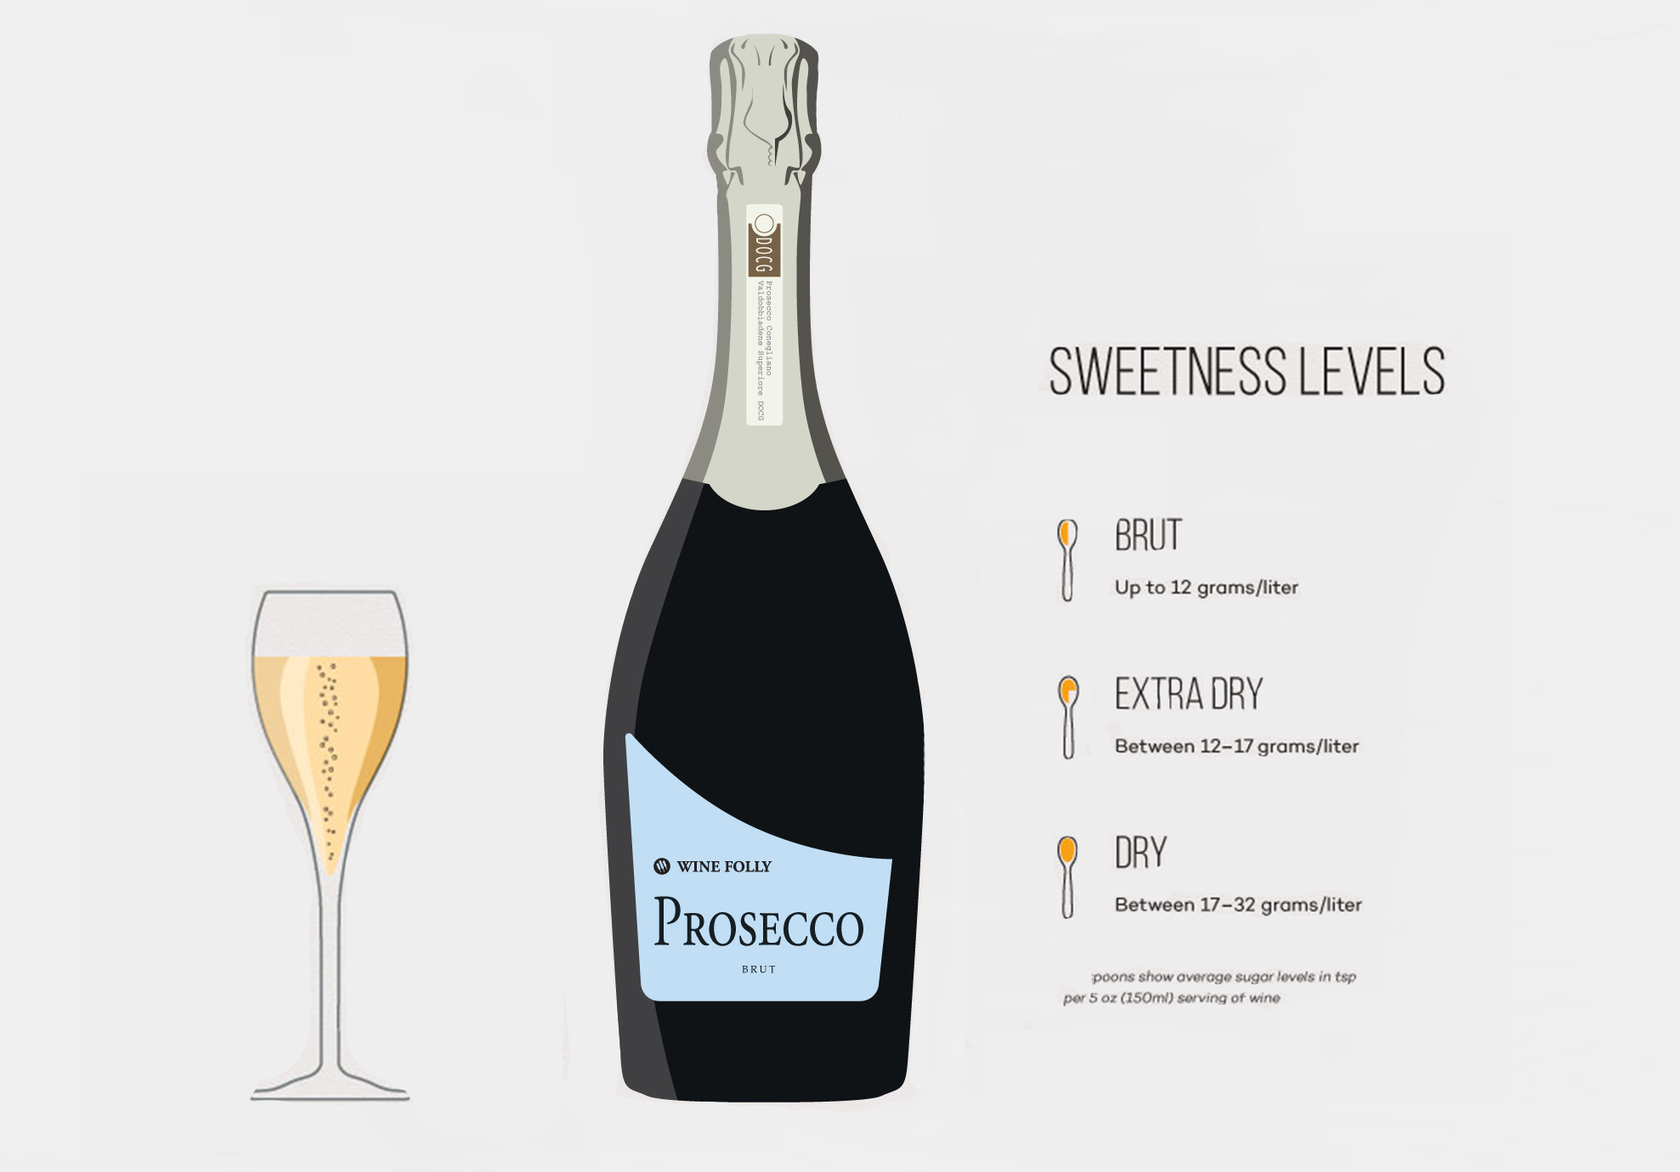 Prosecco denominazione origine controllata. Классификация игристых вин Просекко. Красное игристое вино Просекко. Содержание сахара в Просекко. Игристое вино Prosecco.